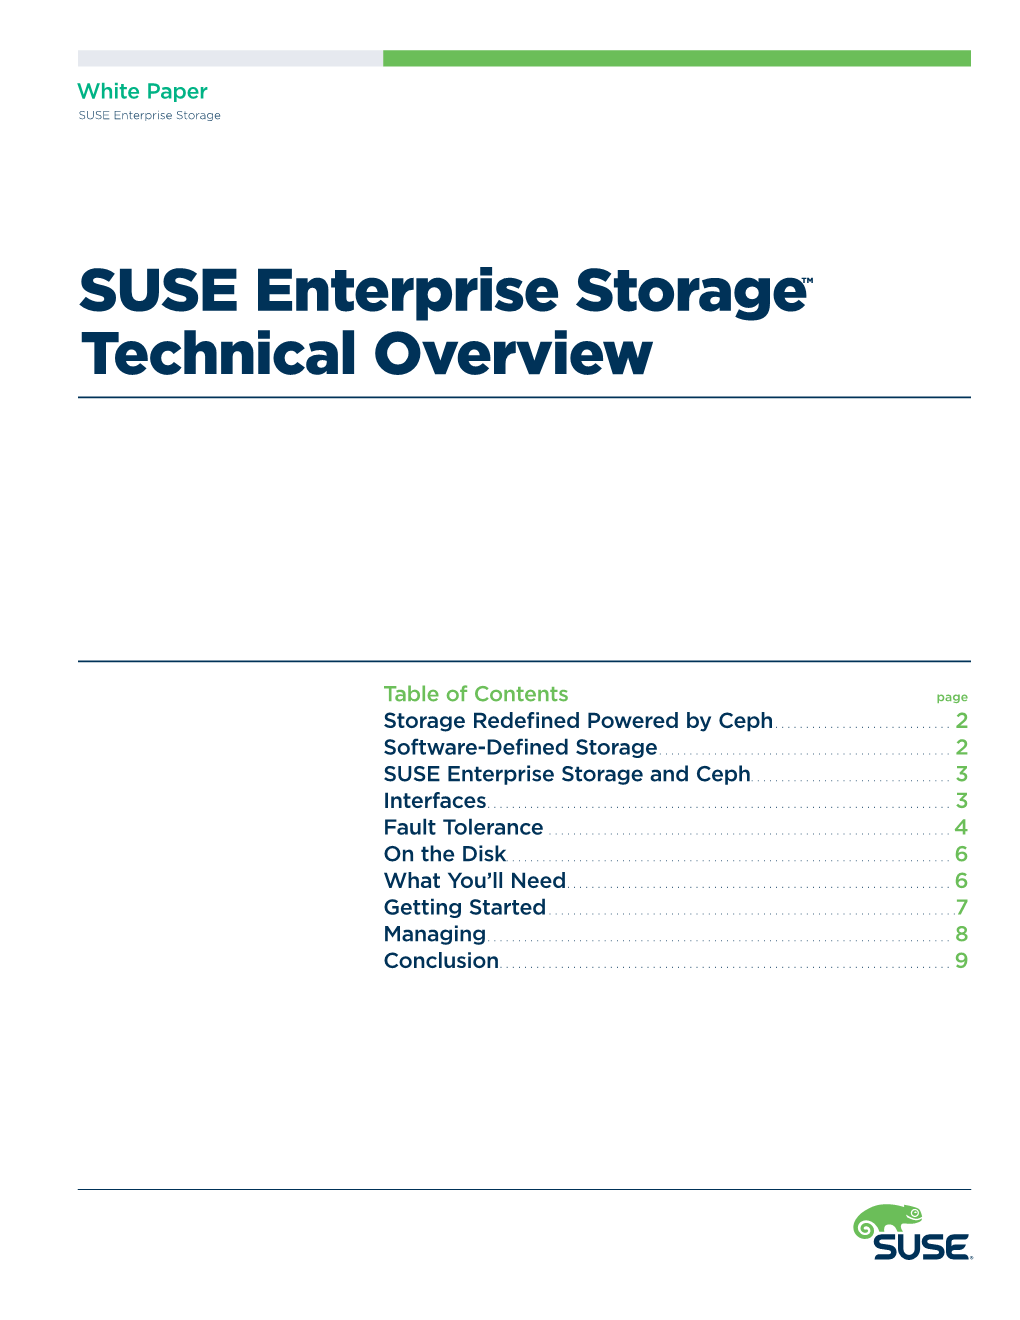 SUSE Enterprise Storage Technical Overview